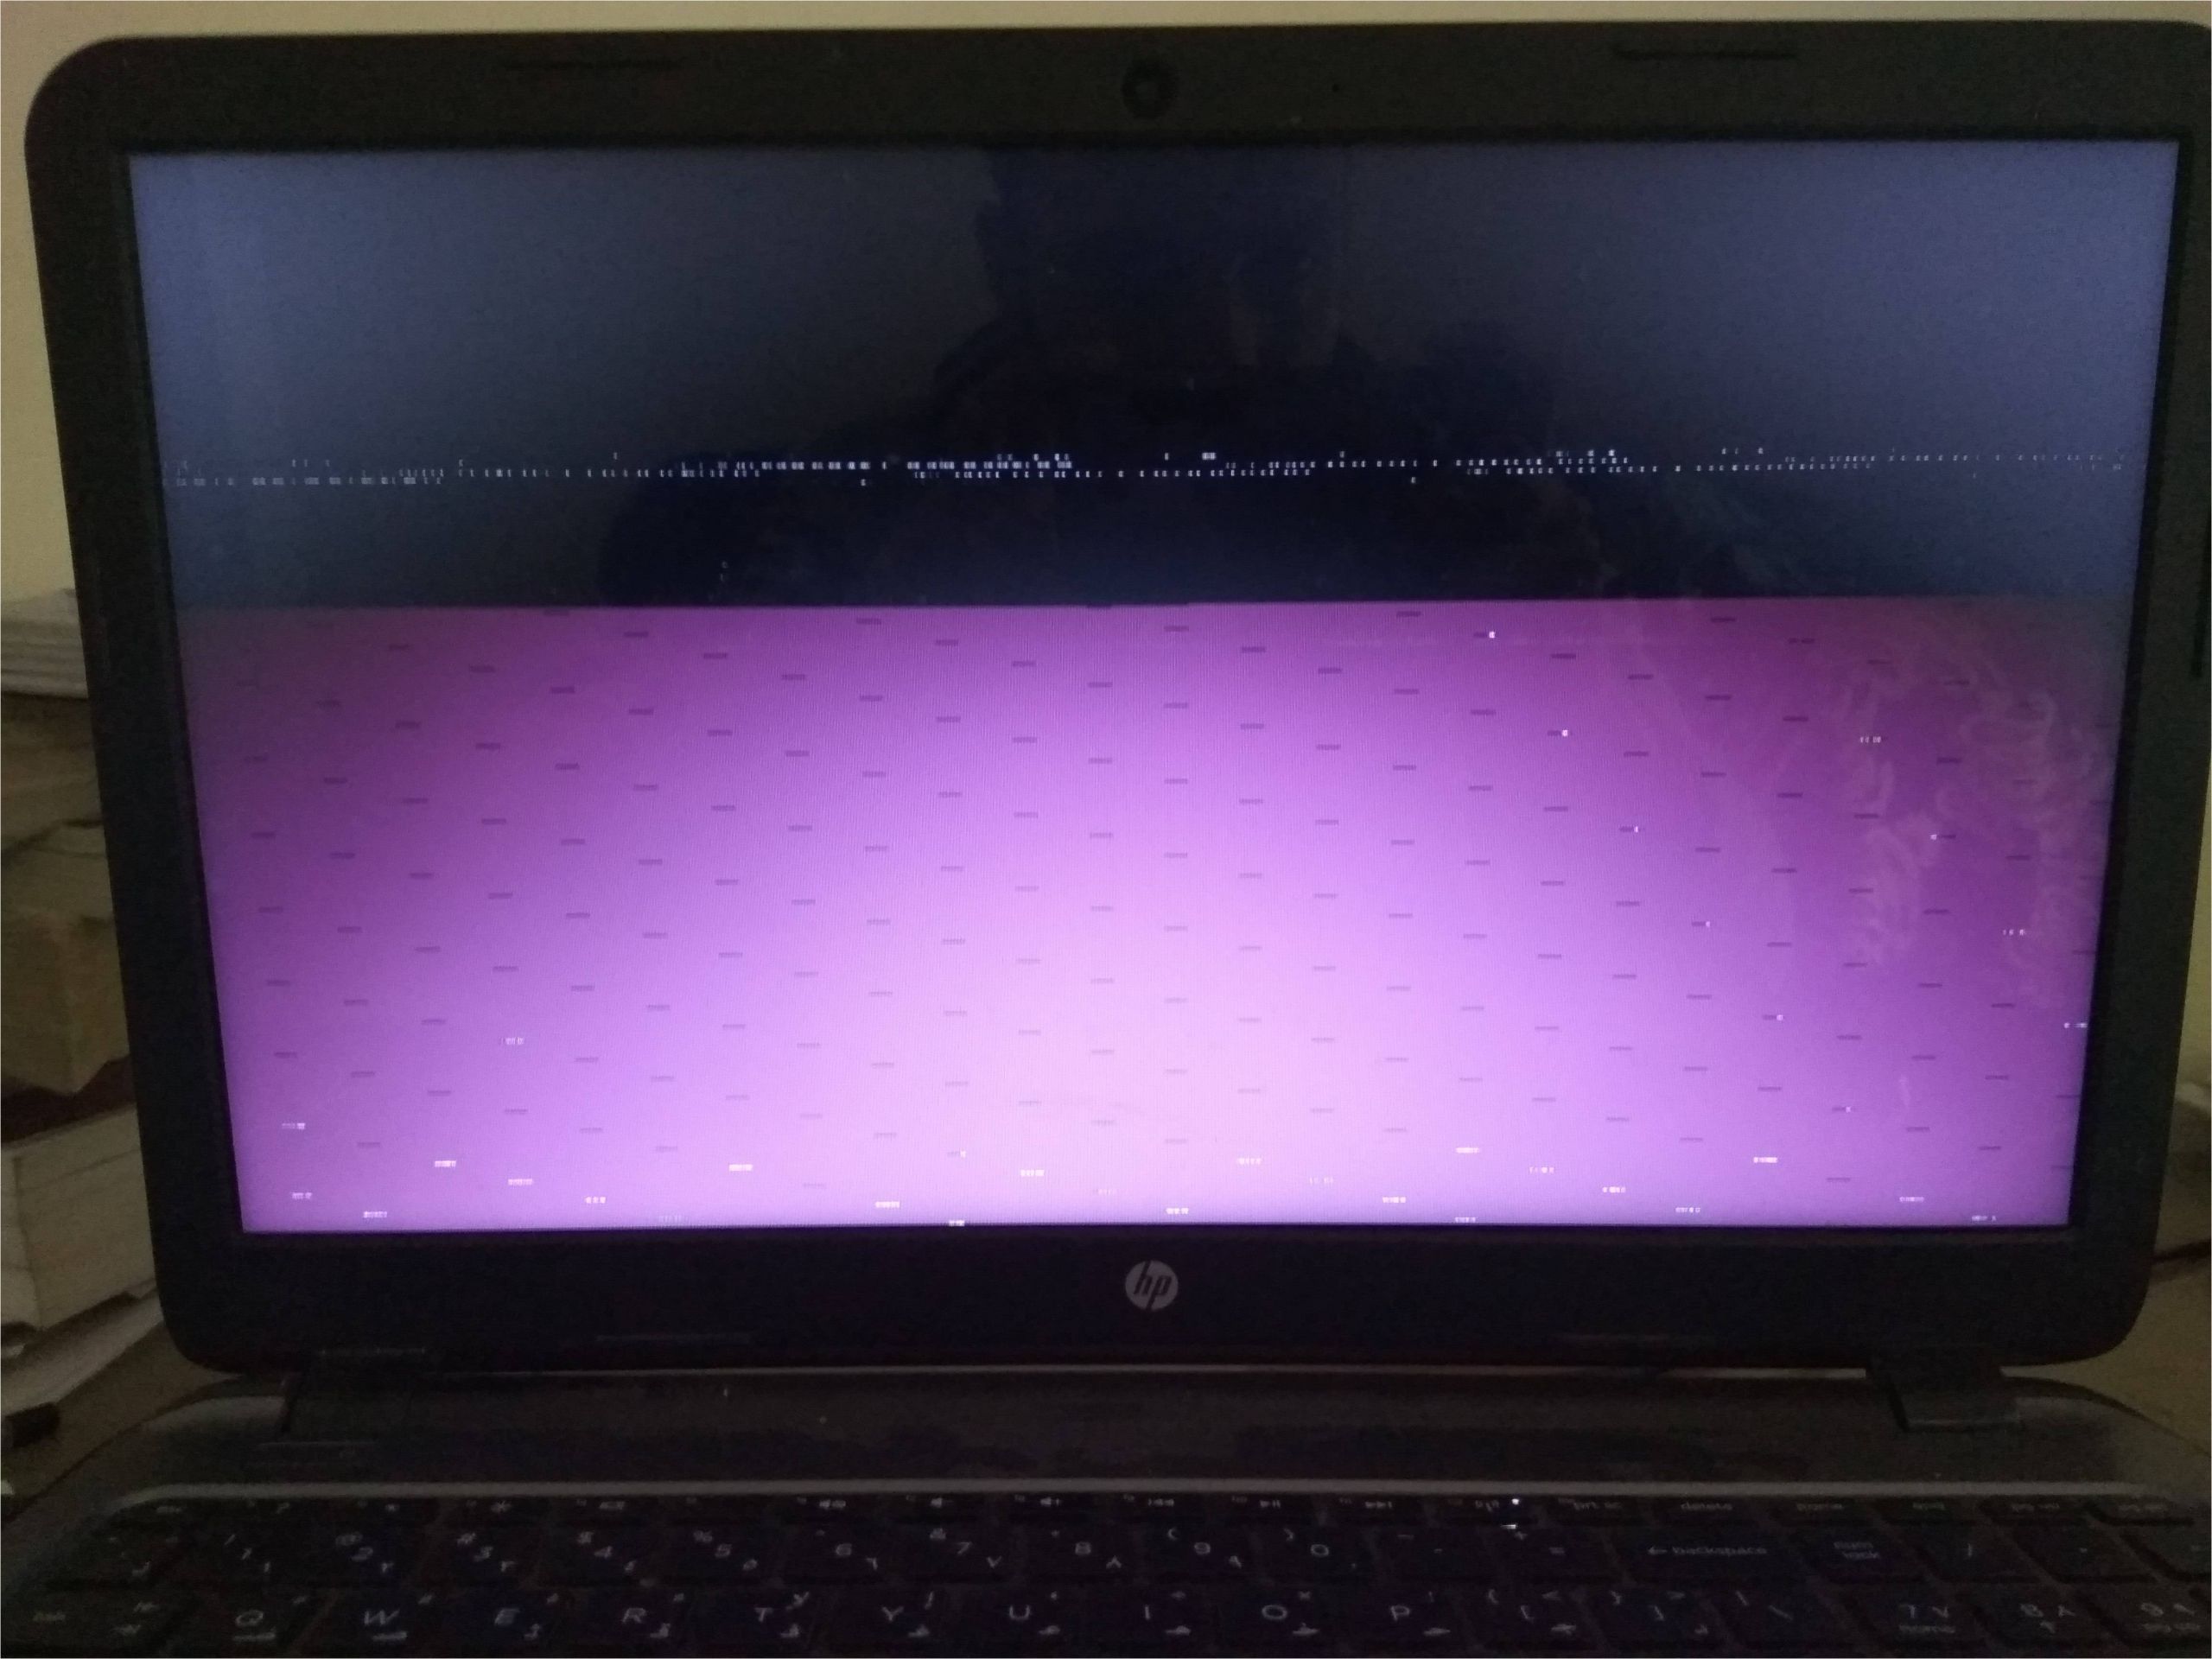 windows 7 screen went blank after dual boot with ubuntu